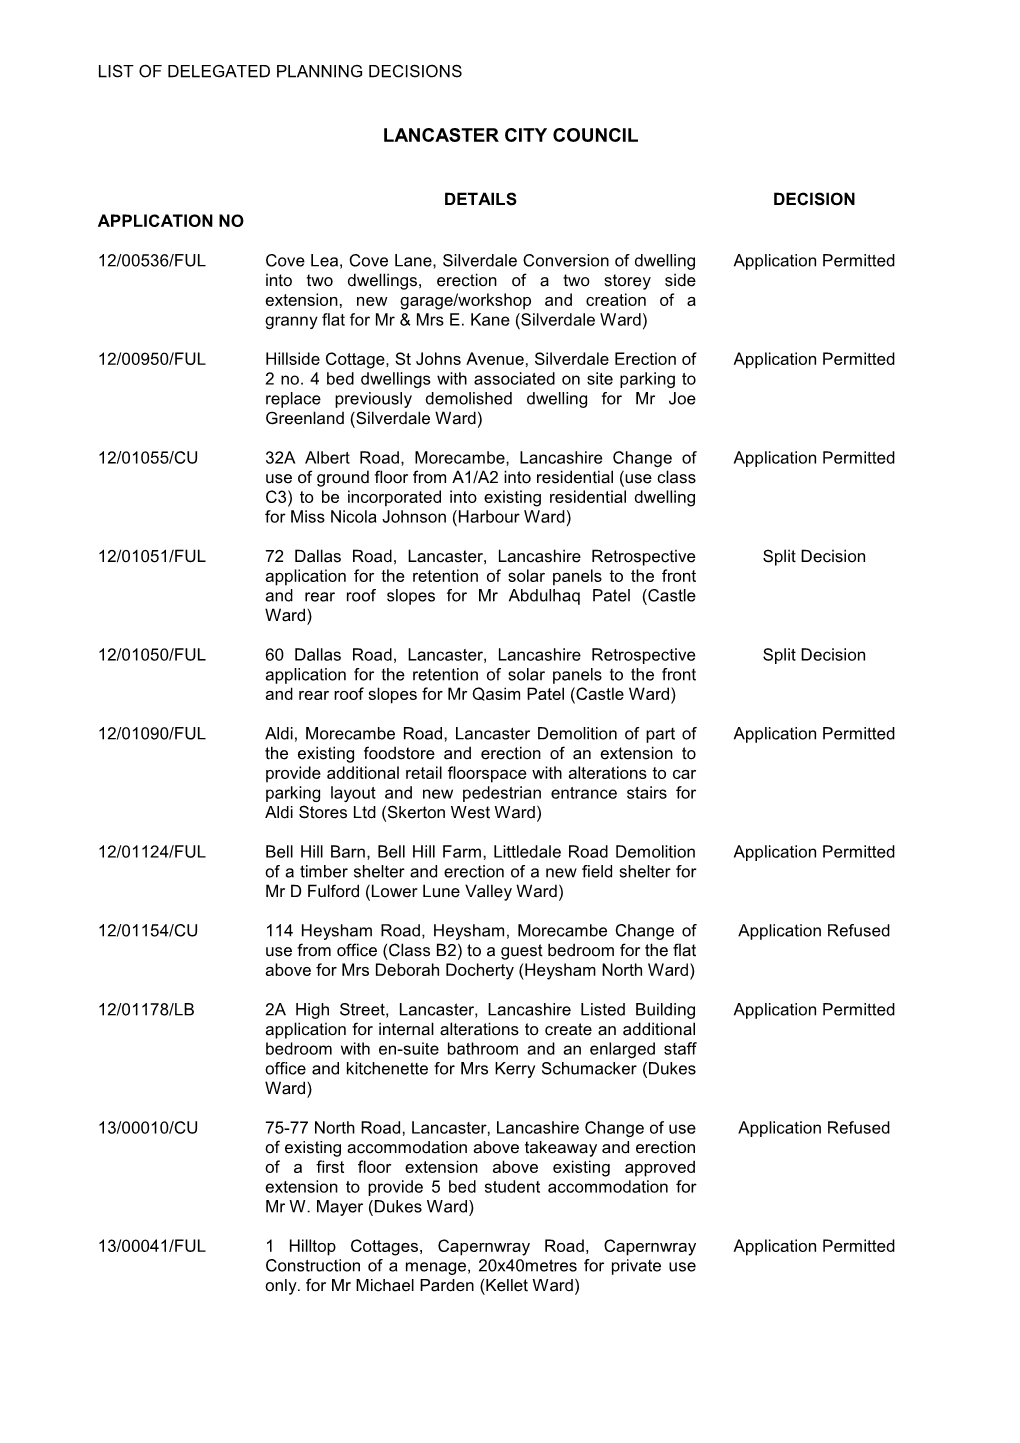 List of Delegated Planning Decisions PDF 29 KB